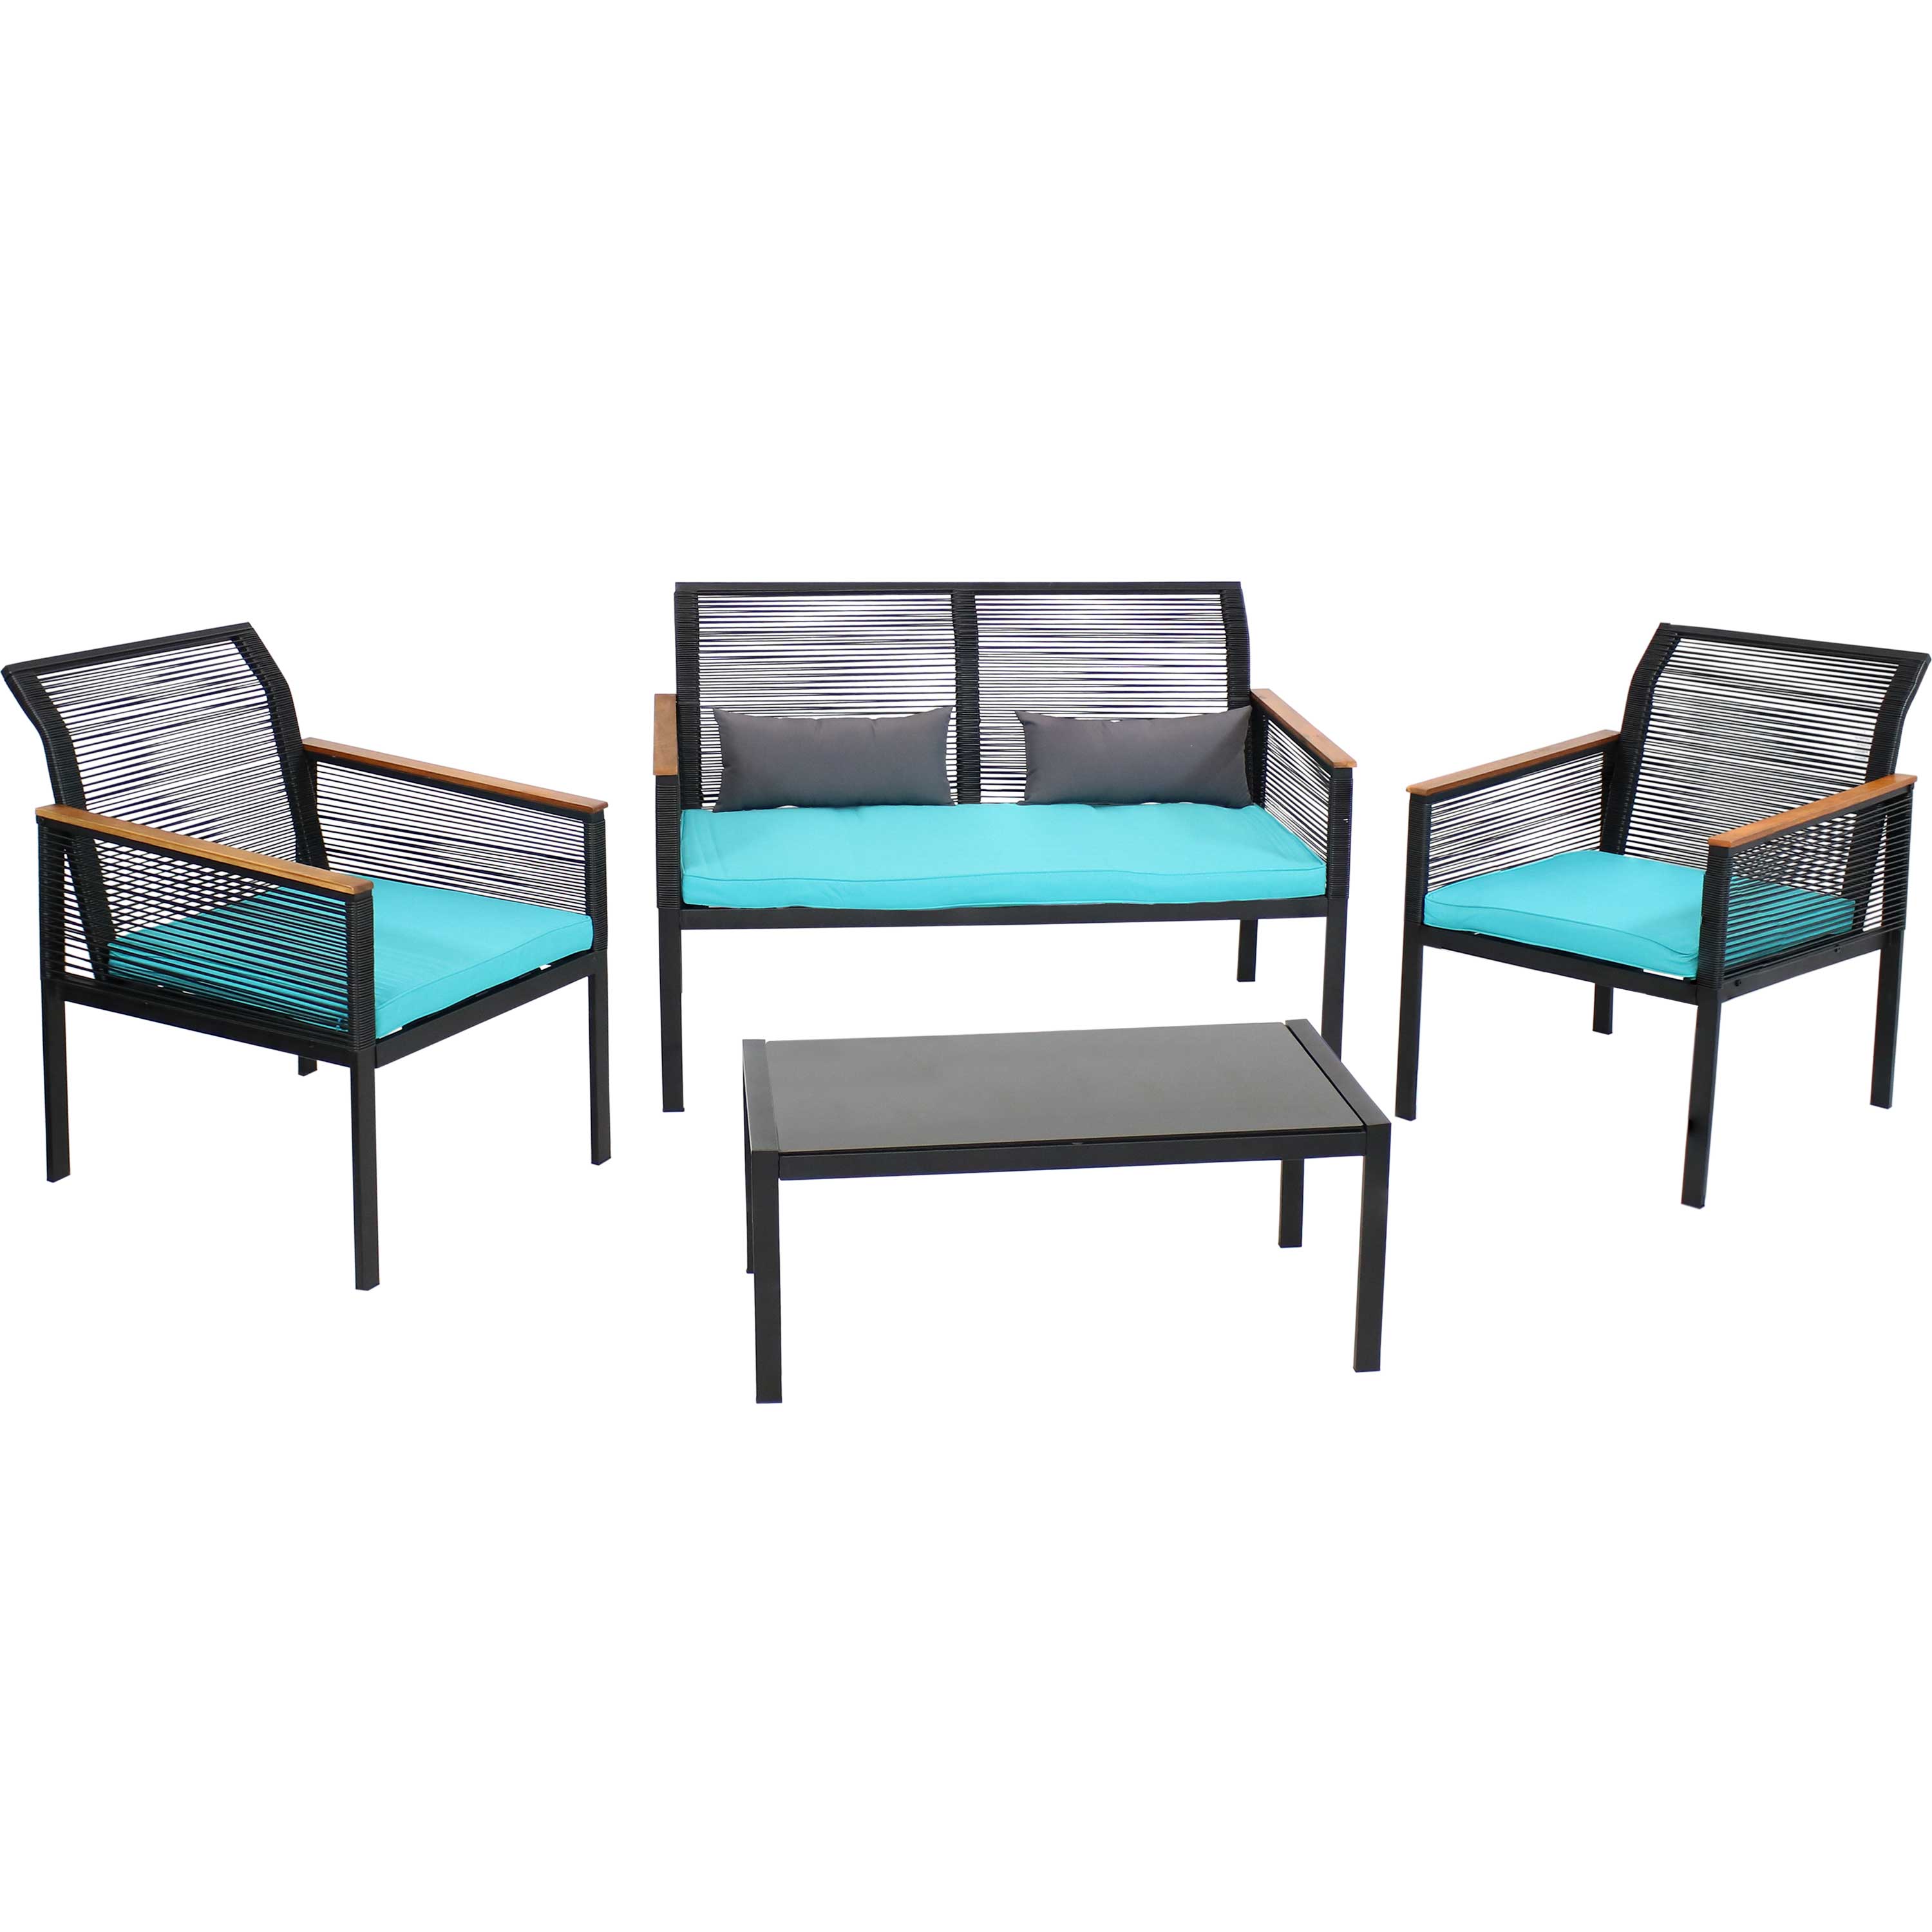 Sunnydaze Coachford 4-Piece Black Resin Rattan Outdoor Patio Furniture Set - Blue Cushions - image 1 of 10